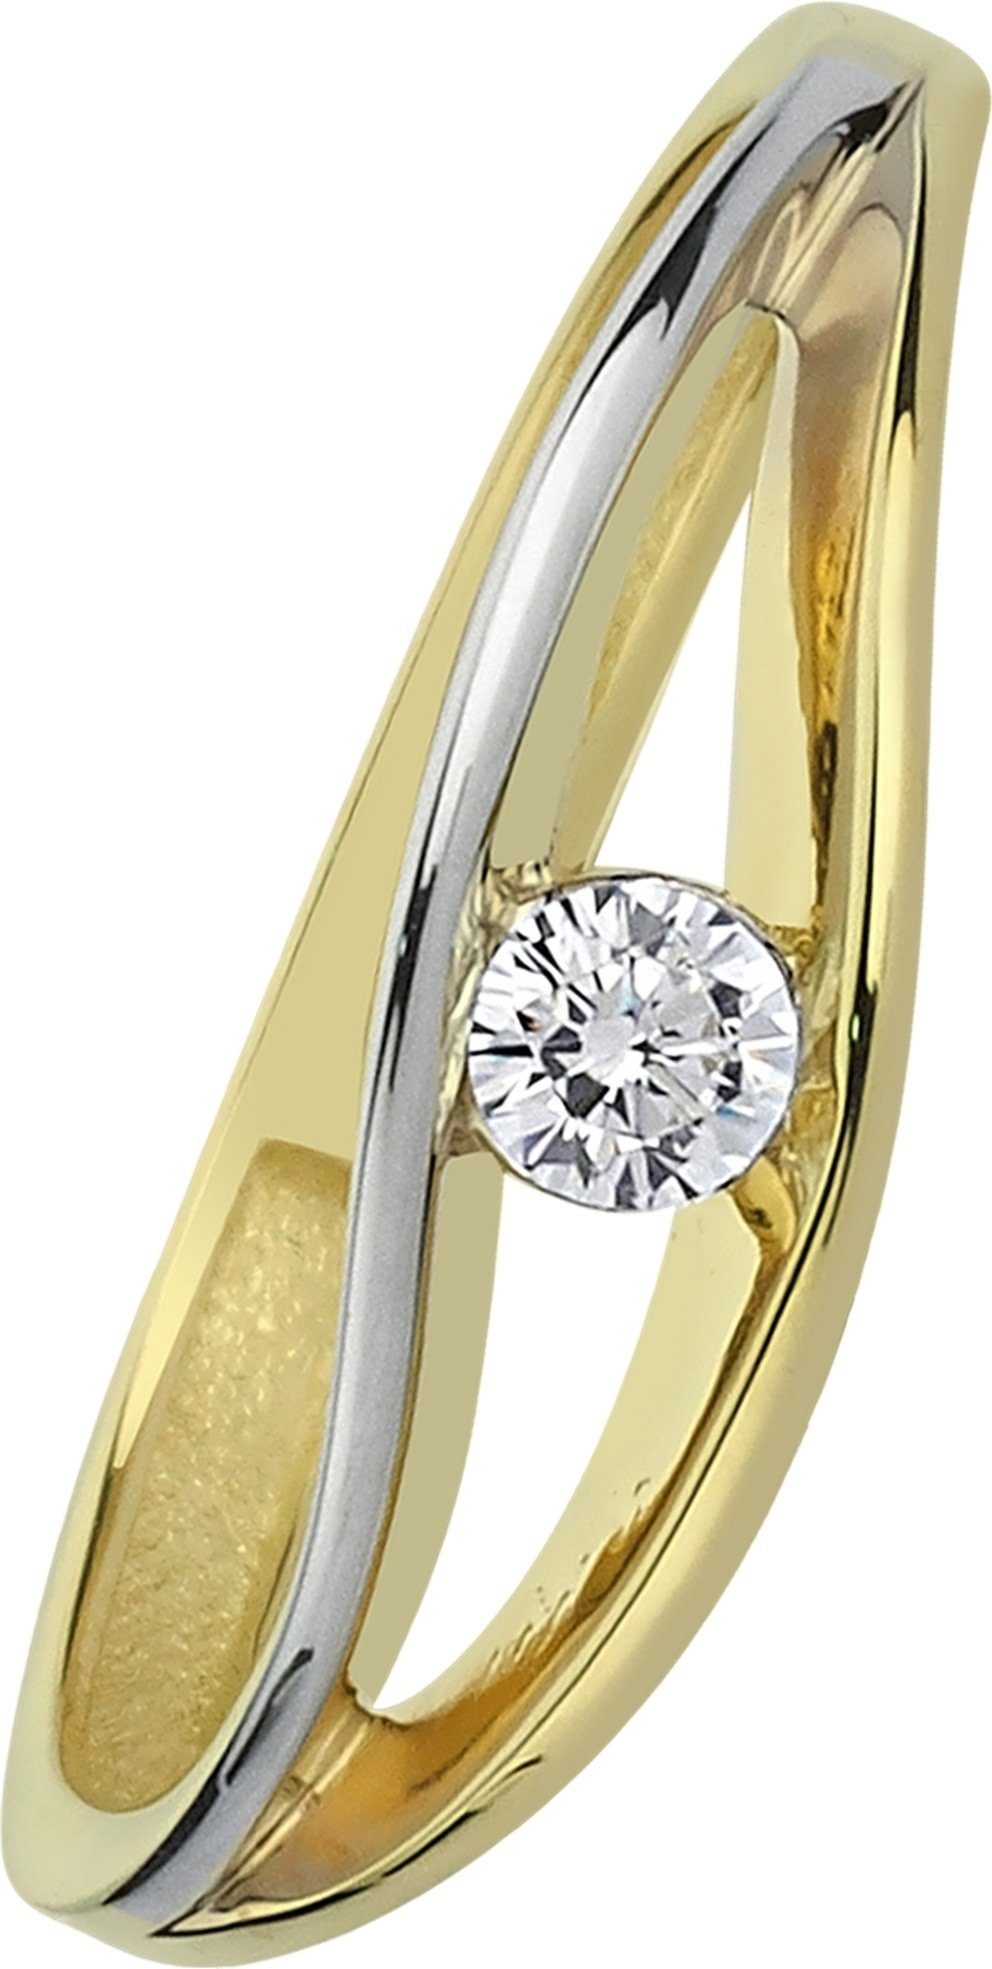 Balia Goldring Balia Damen Ring Gelbgold 8Karat Gr.58 (Fingerring), Damen Ring geschwungen aus 333 Gelbgold - 8 Karat, Farbe: weiß, gold